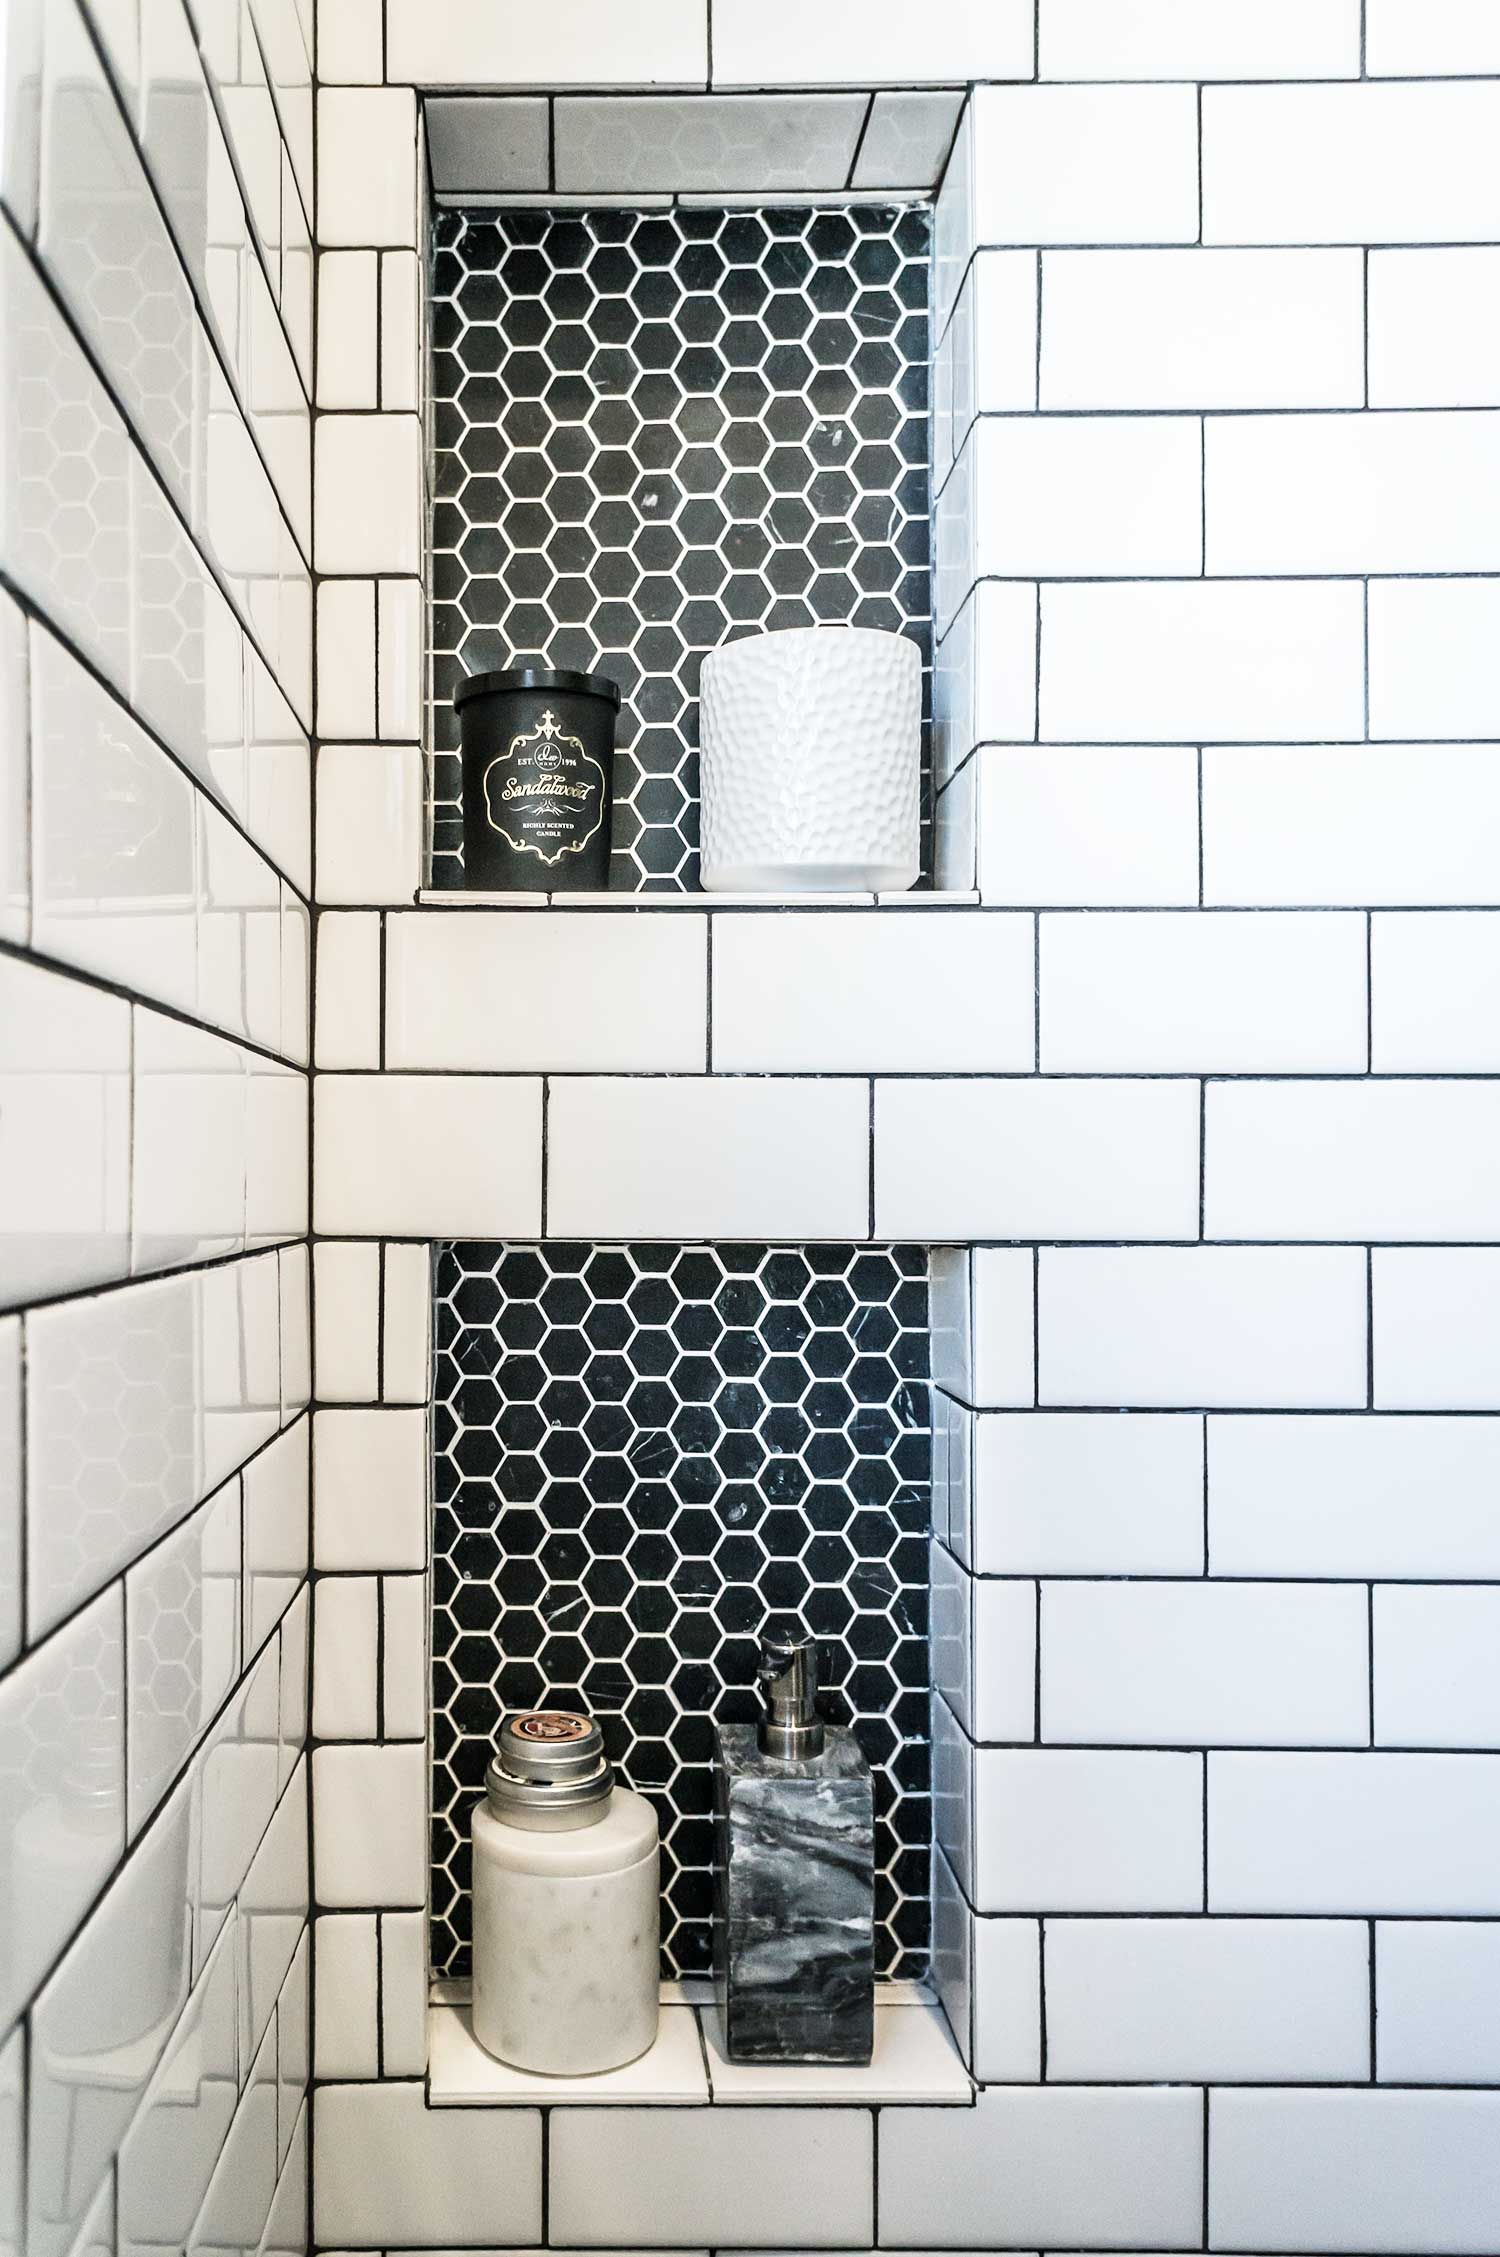 Form Meets Function in an Impressive Bathroom Renovation | Rue